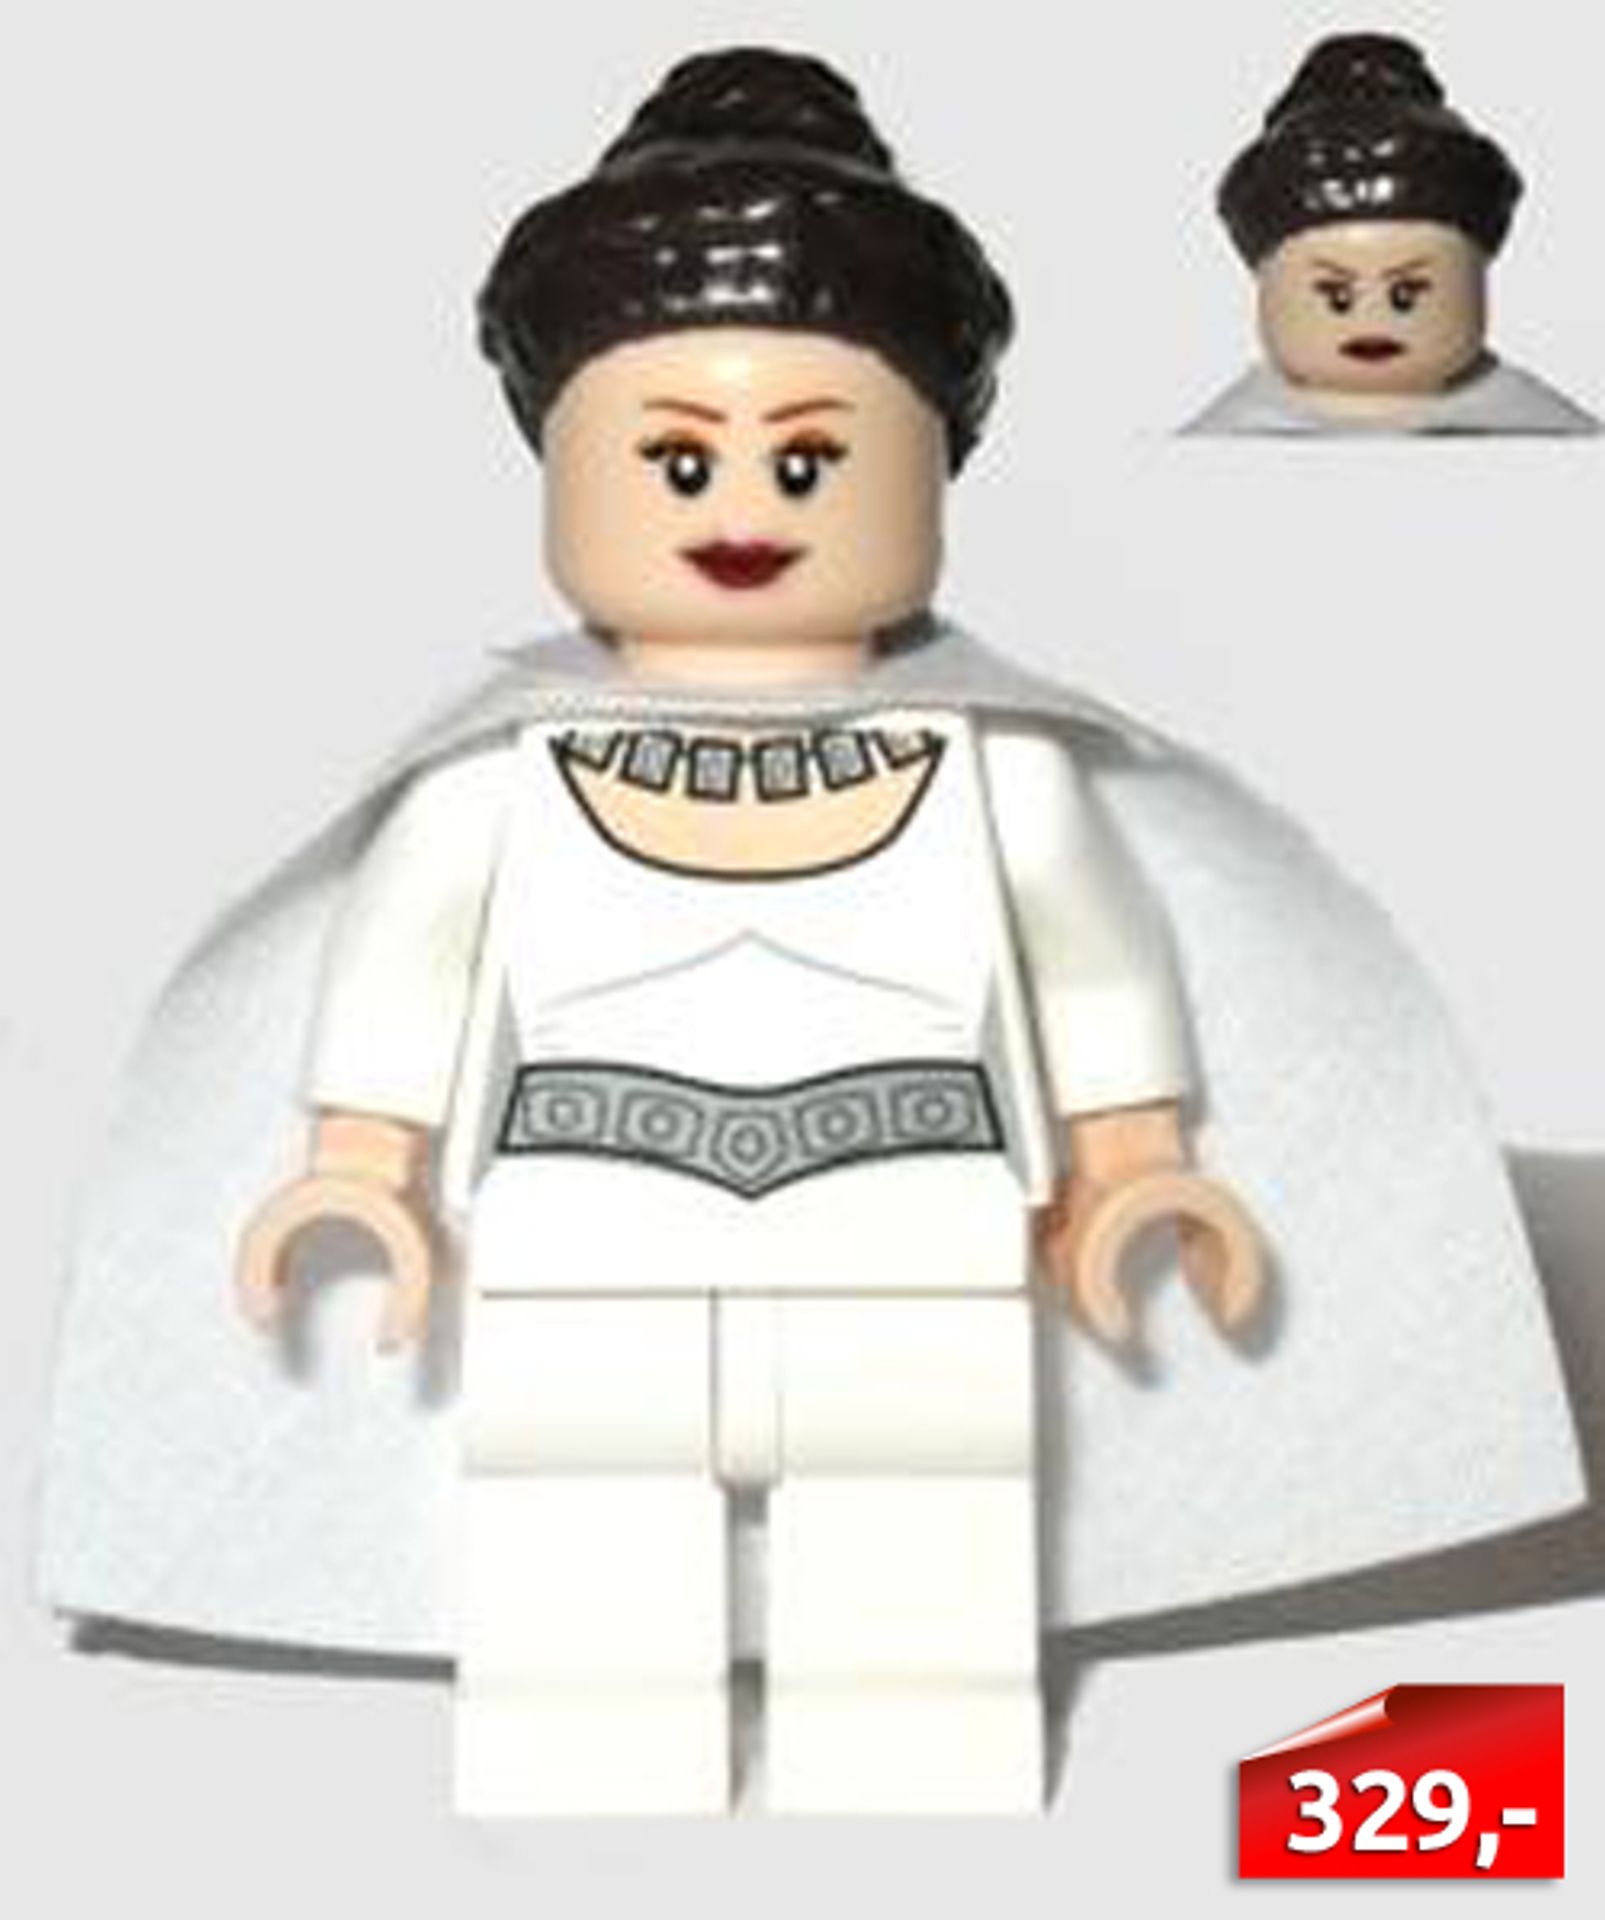 LEGO Star Wars figurka Princess Leia - 329 Kč - GALERIE: Cenné LEGO figurky (8/12)